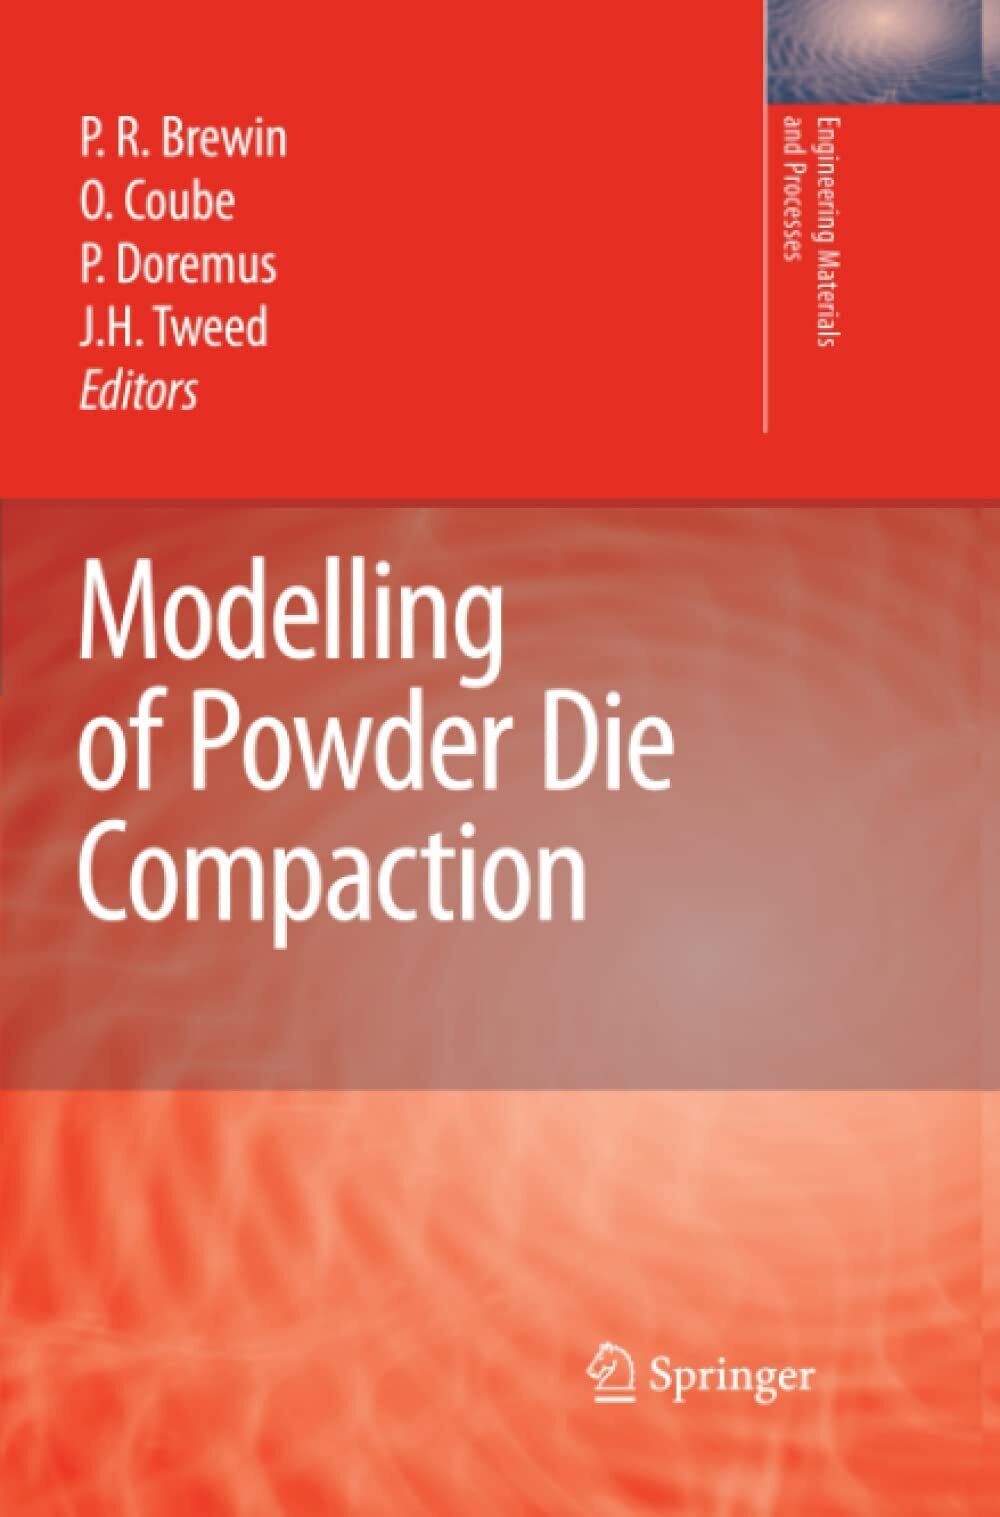 Modelling of Powder Die Compaction - Peter R. Brewin - Springer, 2010